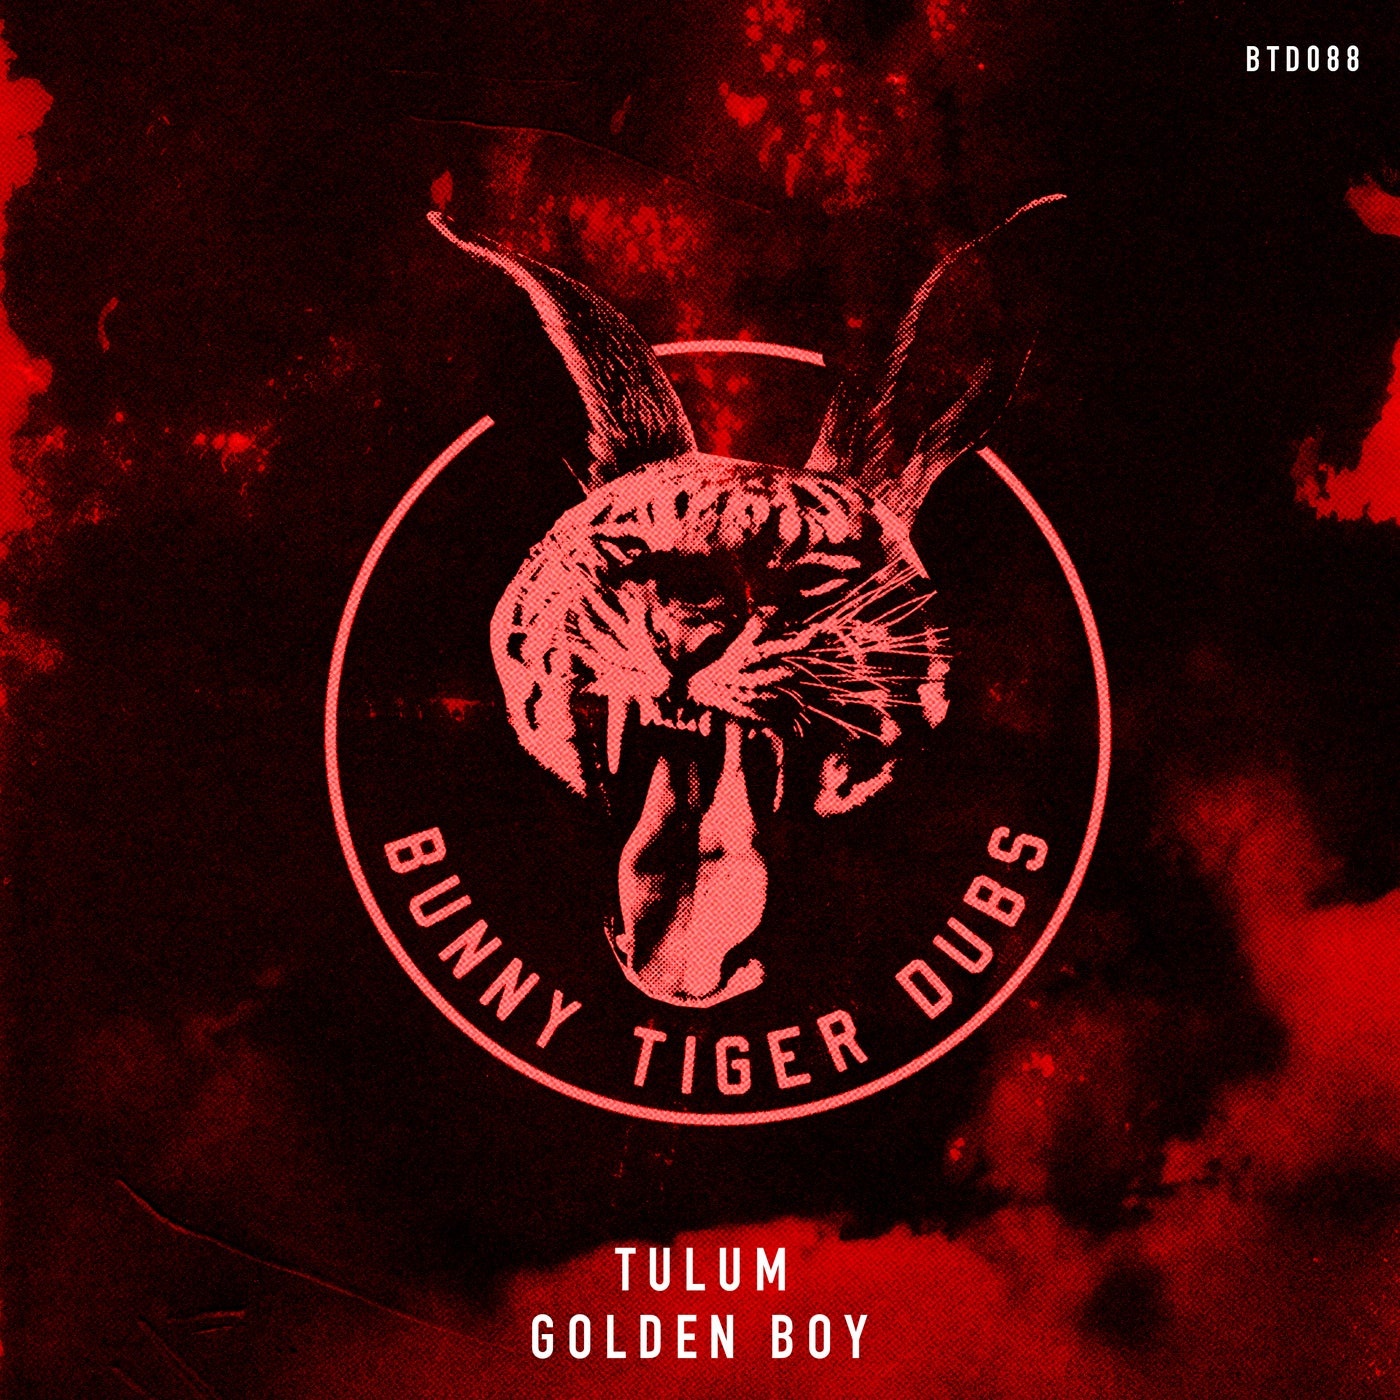 Tulum - Golden Boy [BTD088]